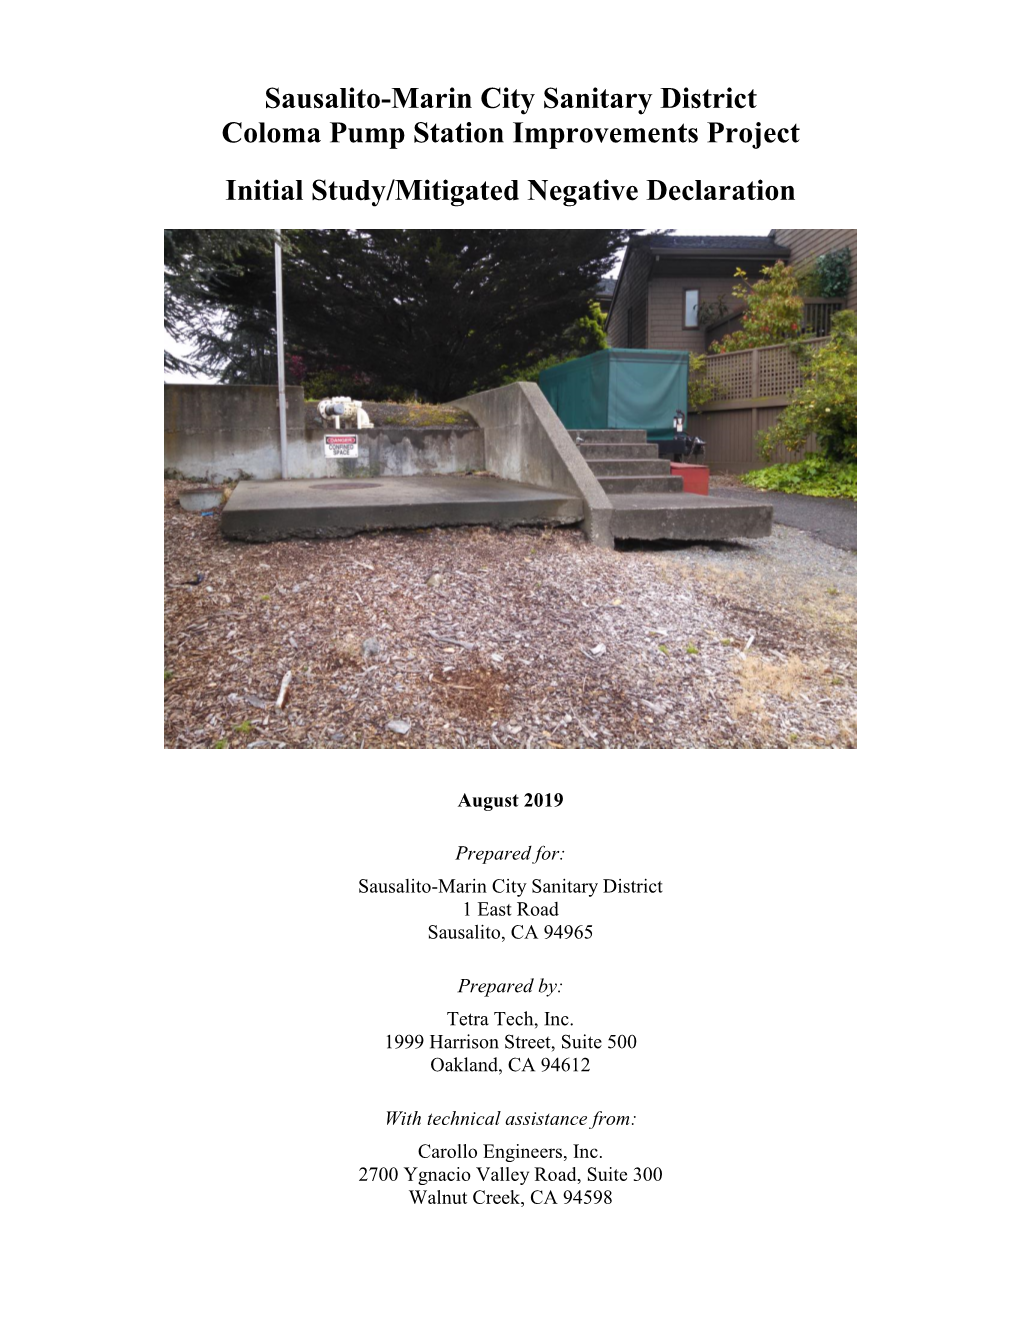 Initial Study-Mitigated Negative Declaration (IS-MND)